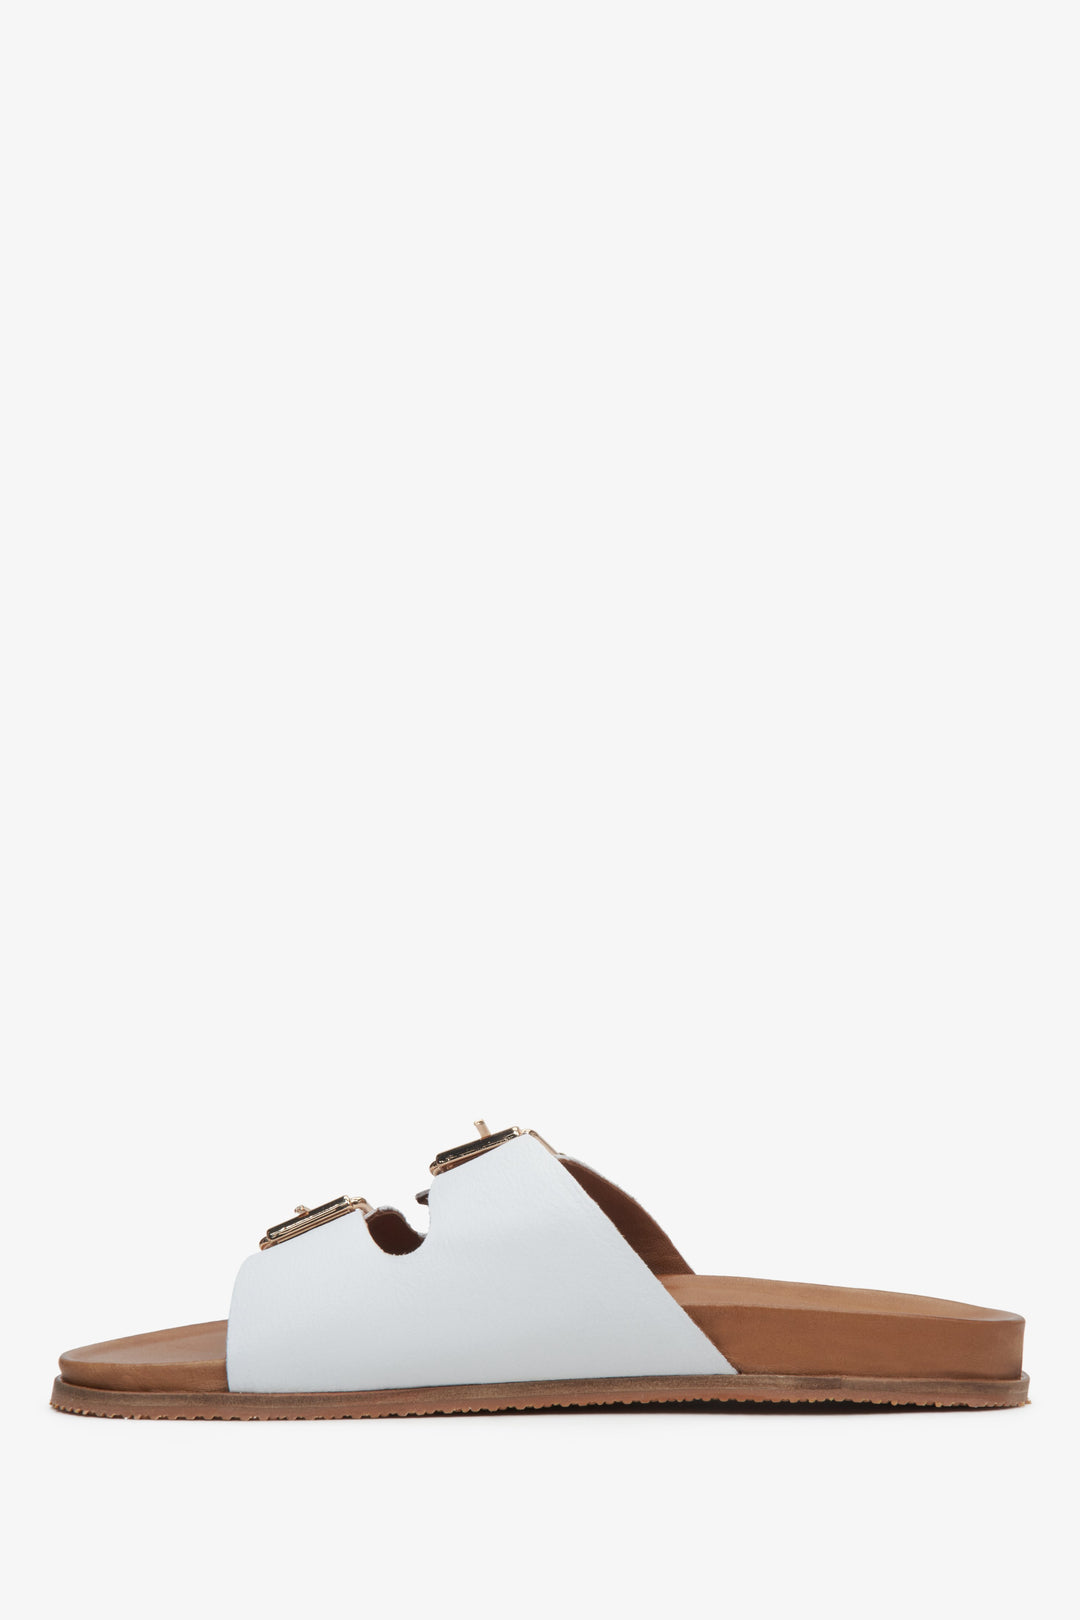 Women's white leather Estro slide sandals with thick straps - shoe profile.